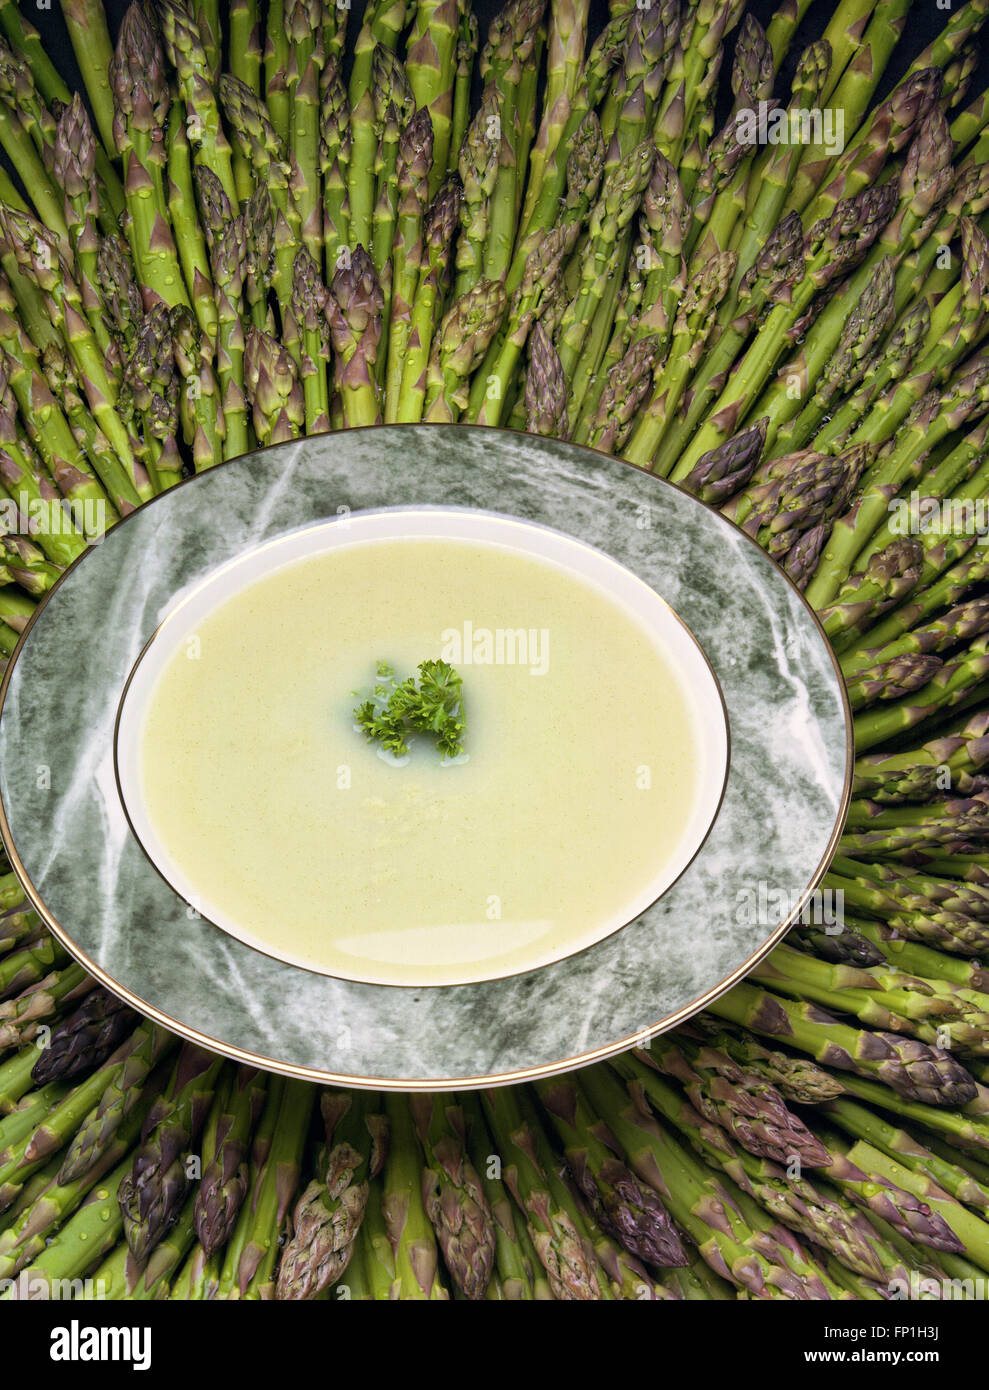 a bowl of asparagus soup Stock Photo